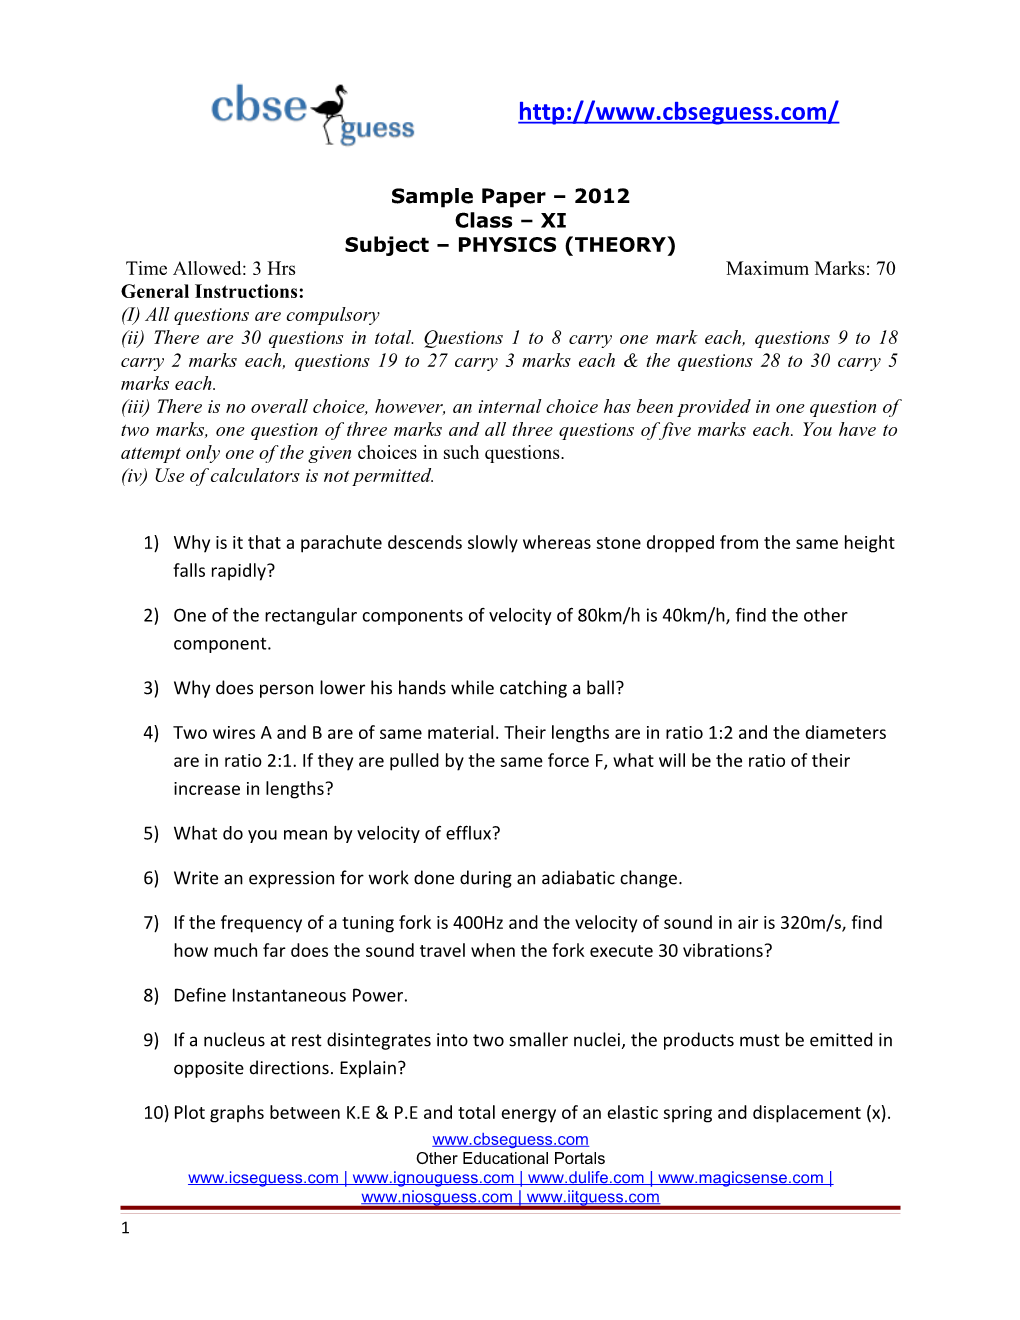 Sample Paper 2012 Class XI Subject PHYSICS (THEORY)